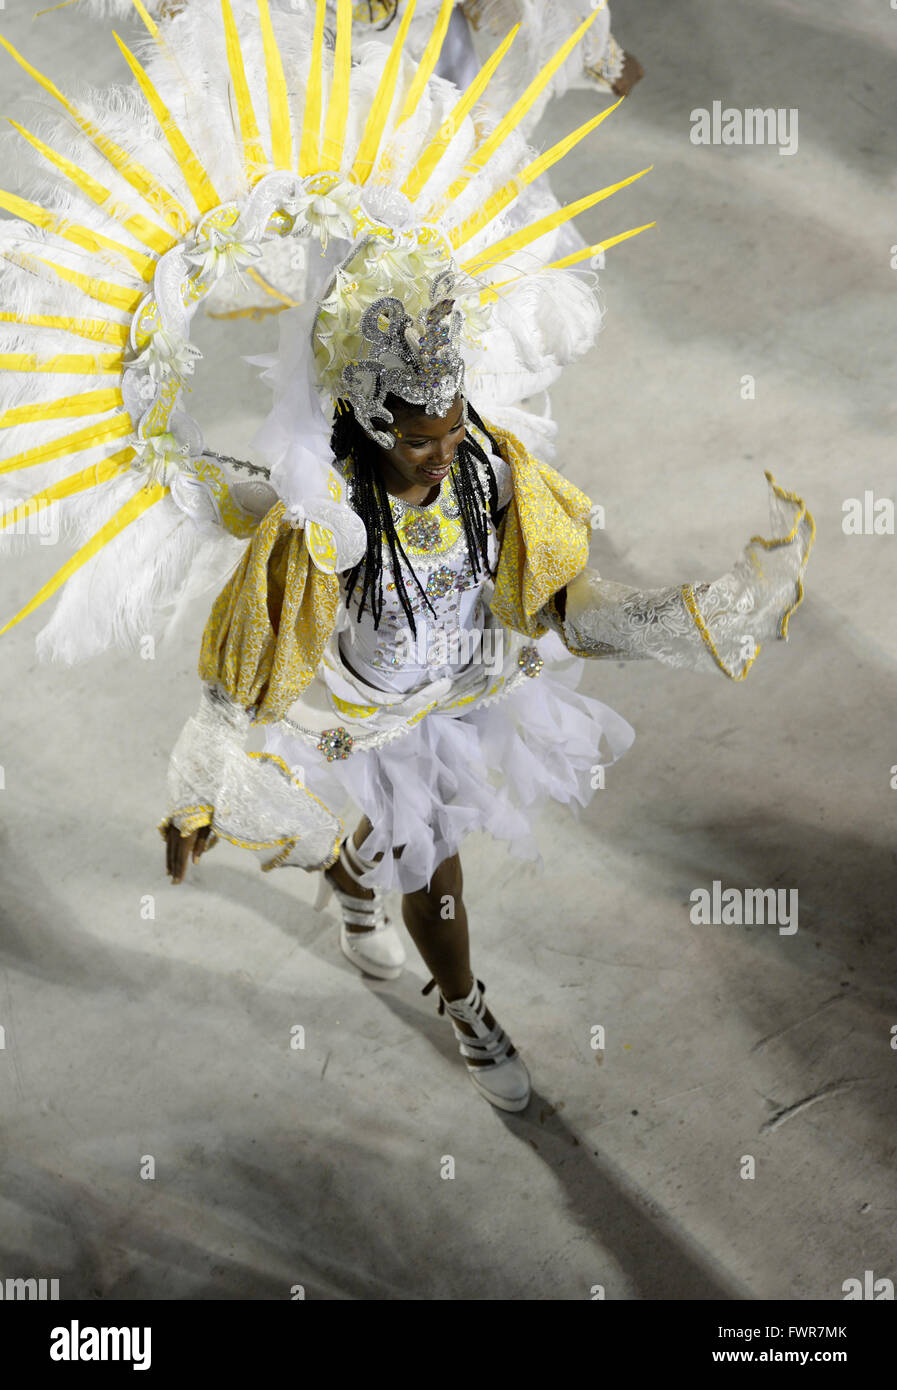 Kostümierte Samba Tänzer, Parade der Sambaschule Estacio de Sá, Karneval 2016 im Sambadrome, Rio De Janeiro, Brasilien Stockfoto